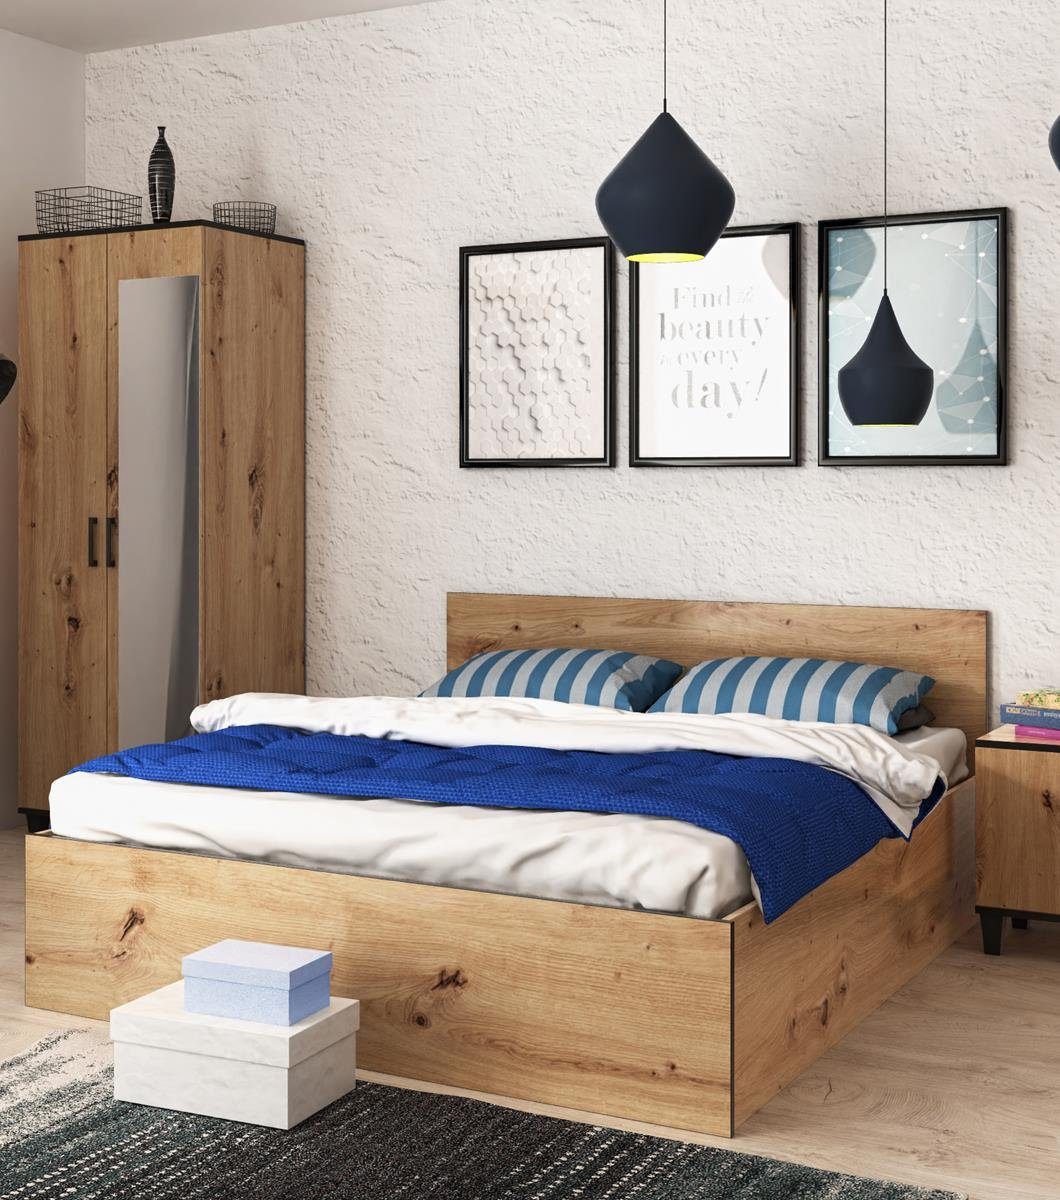 Beautysofa Holzbett P13 (mit Bettkasten, Liegefläche 160x200 cm), Bett mit  Holzgestell, Lattenrost, loft / rustikal Stil